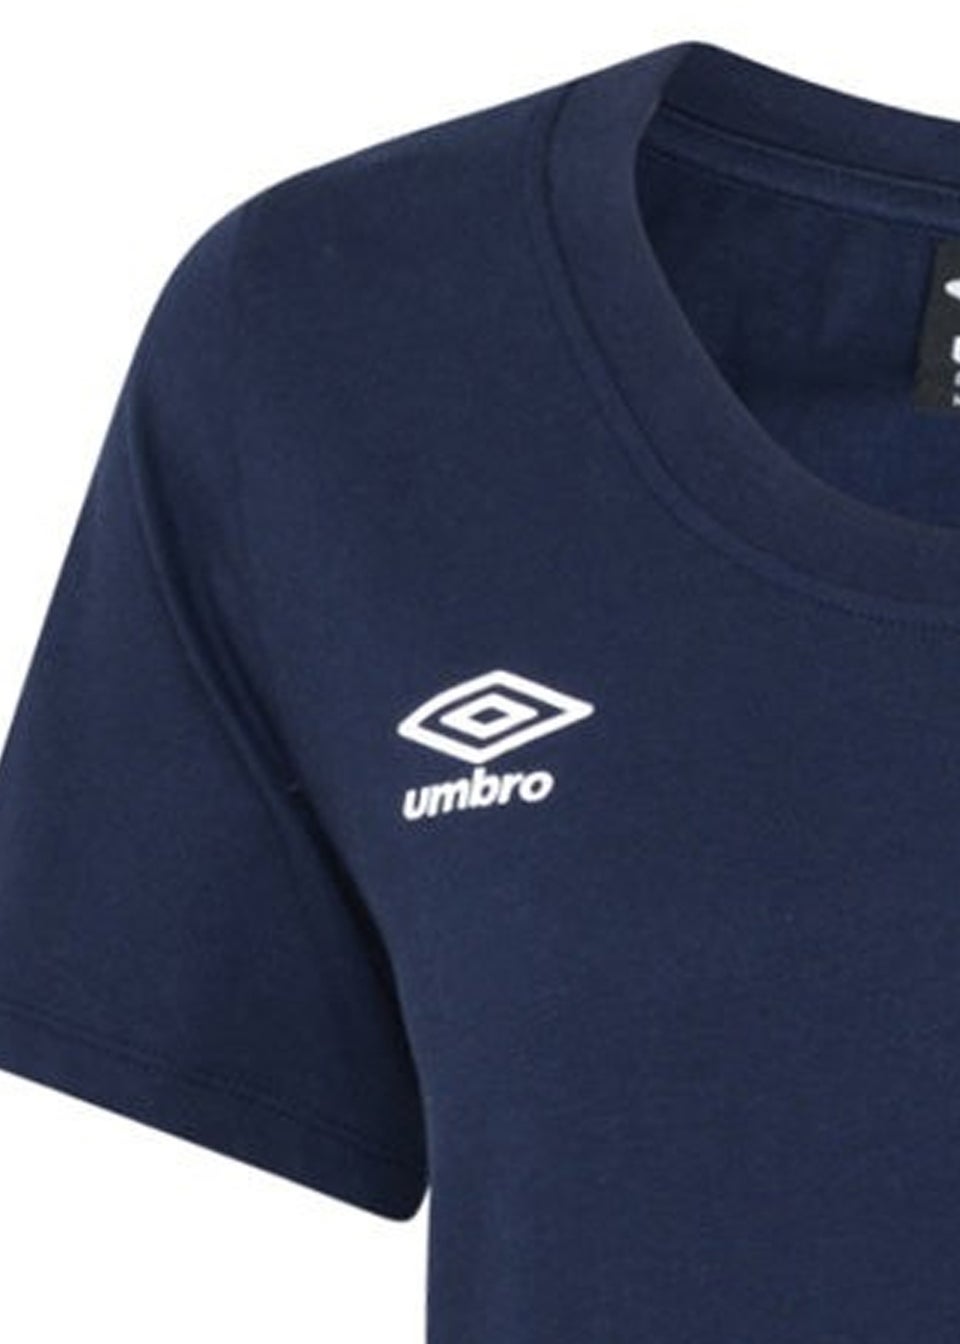 Umbro Navy/White Club Leisure T-Shirt